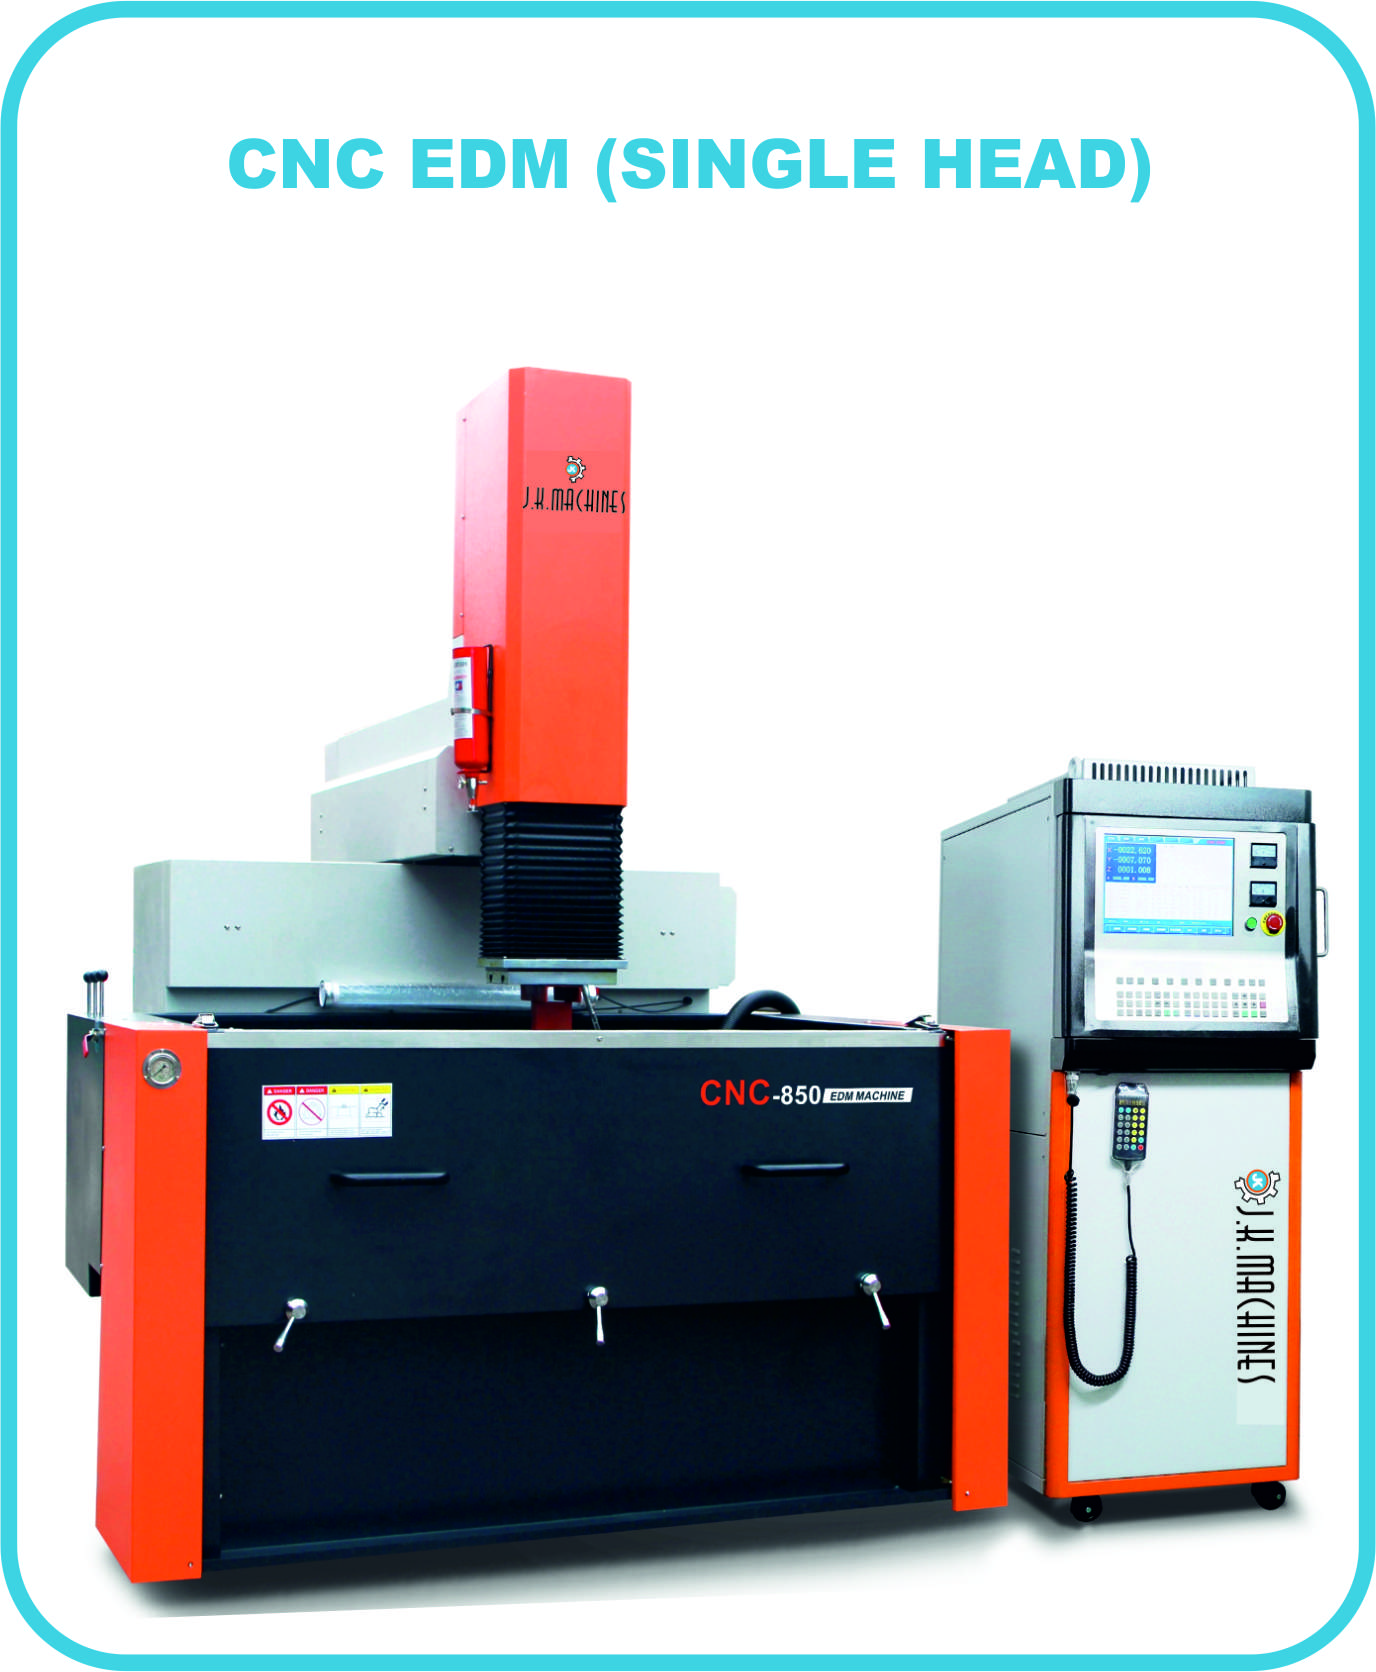 CNC EDM Fixed Table Moving Head (Single Head)